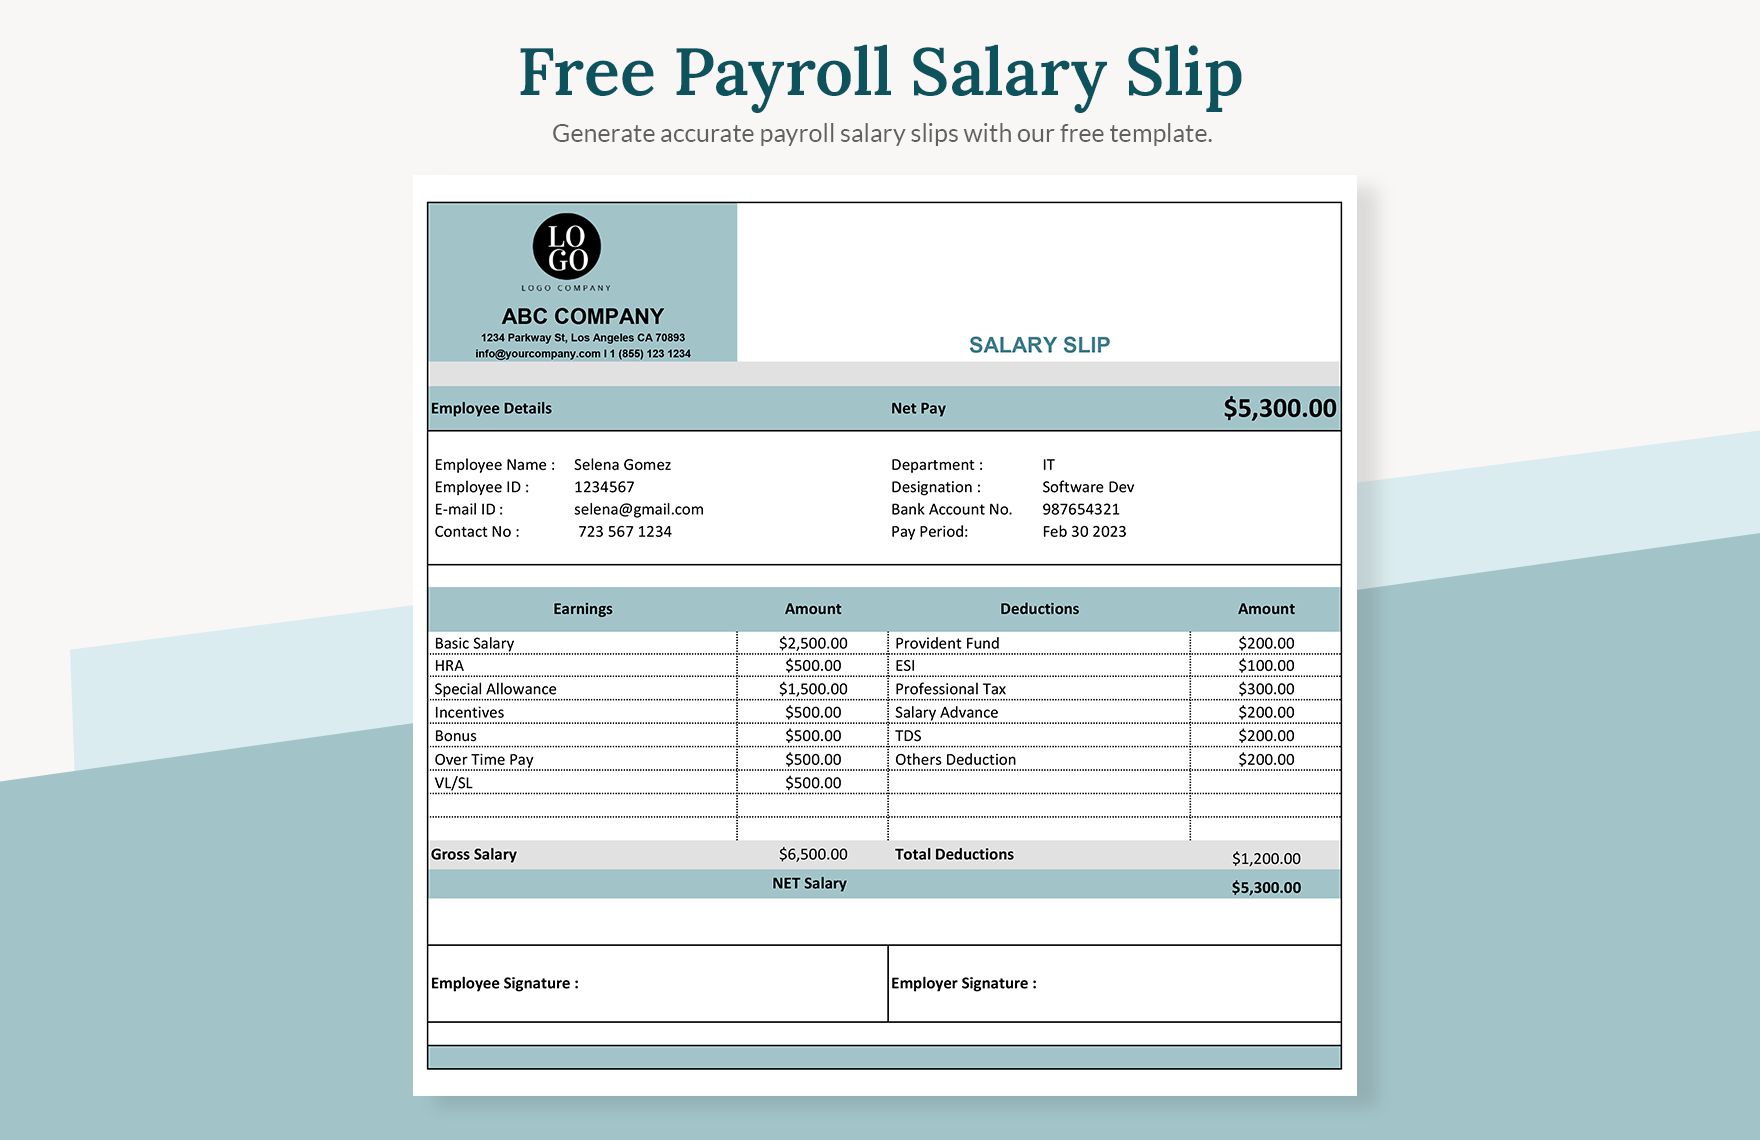 Payroll Salary Slip